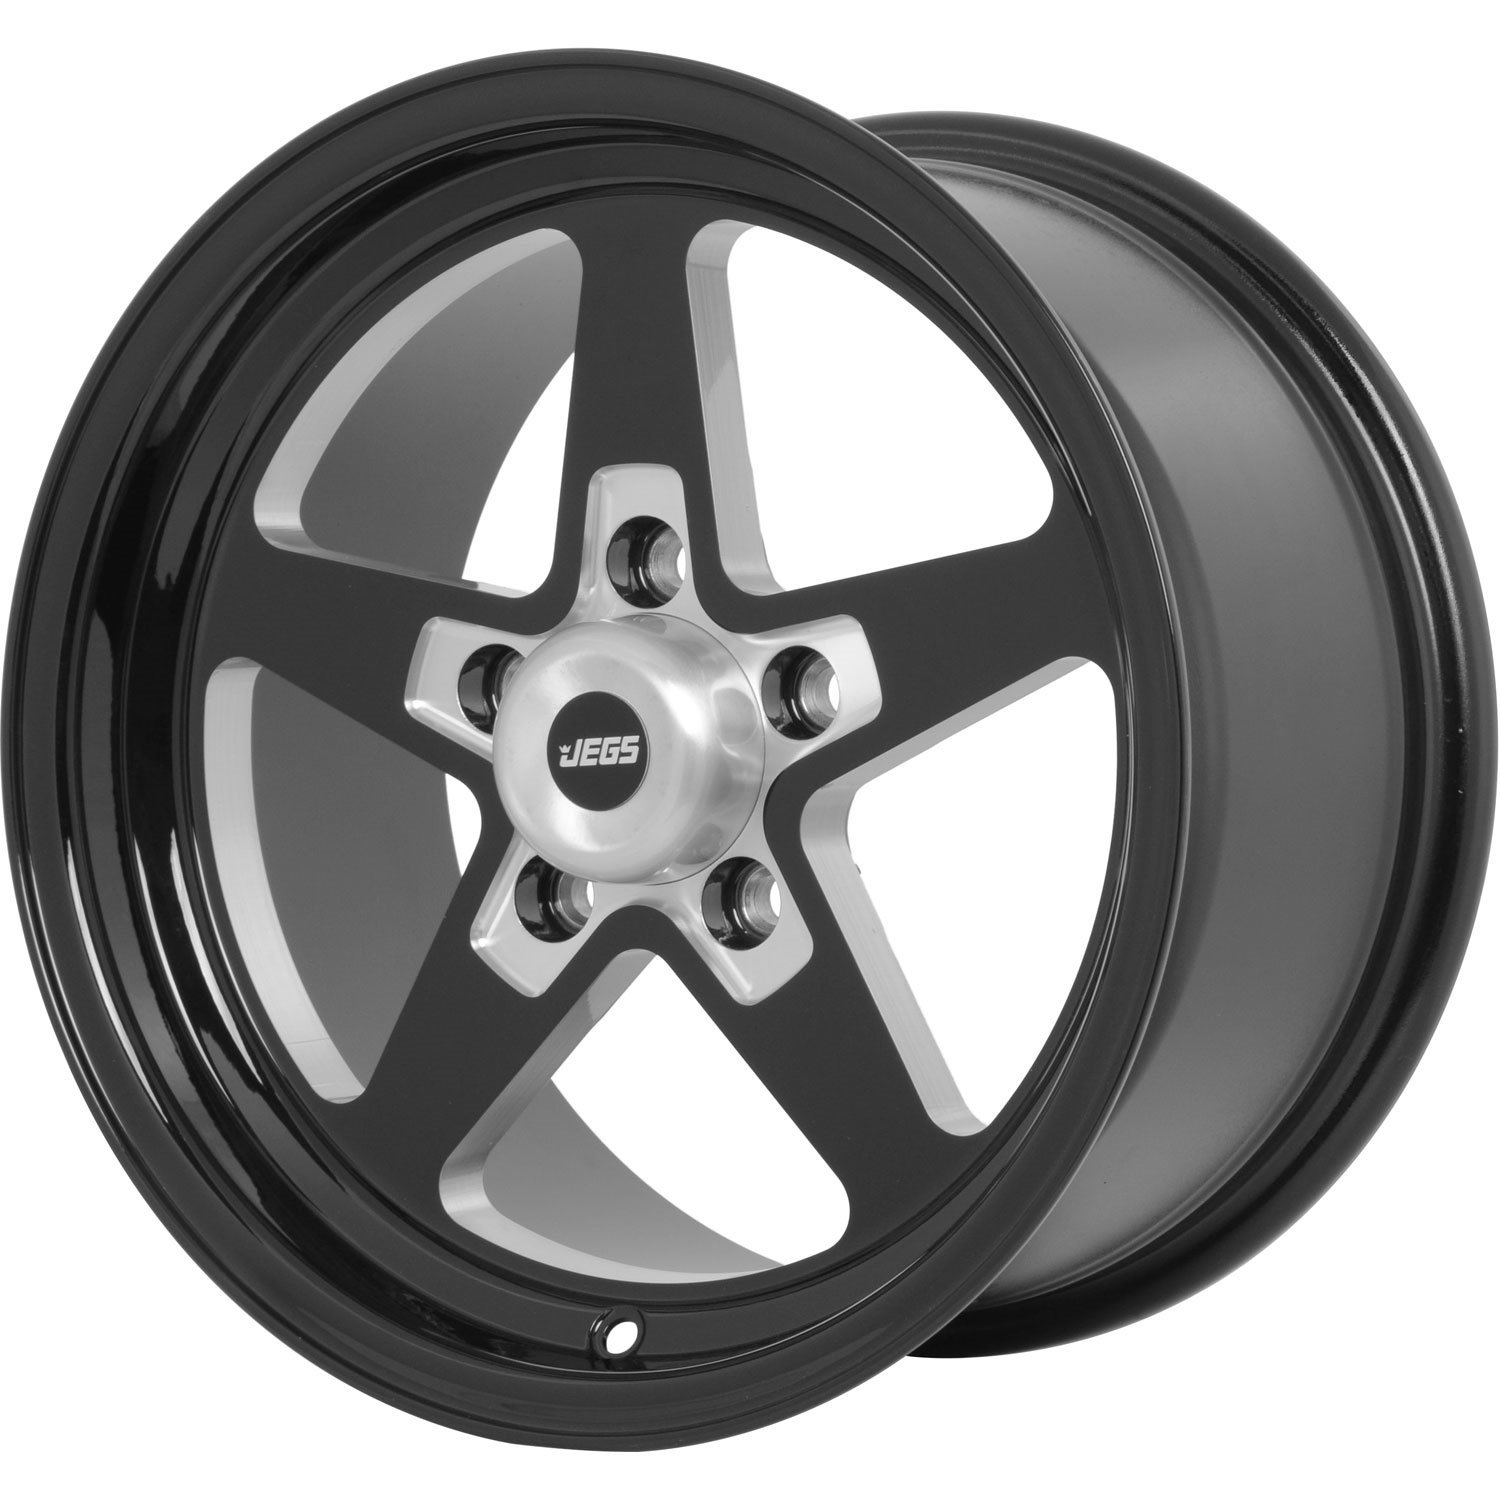 SSR Star Wheel [Size: 15 in. x 8 in.] Gloss Black